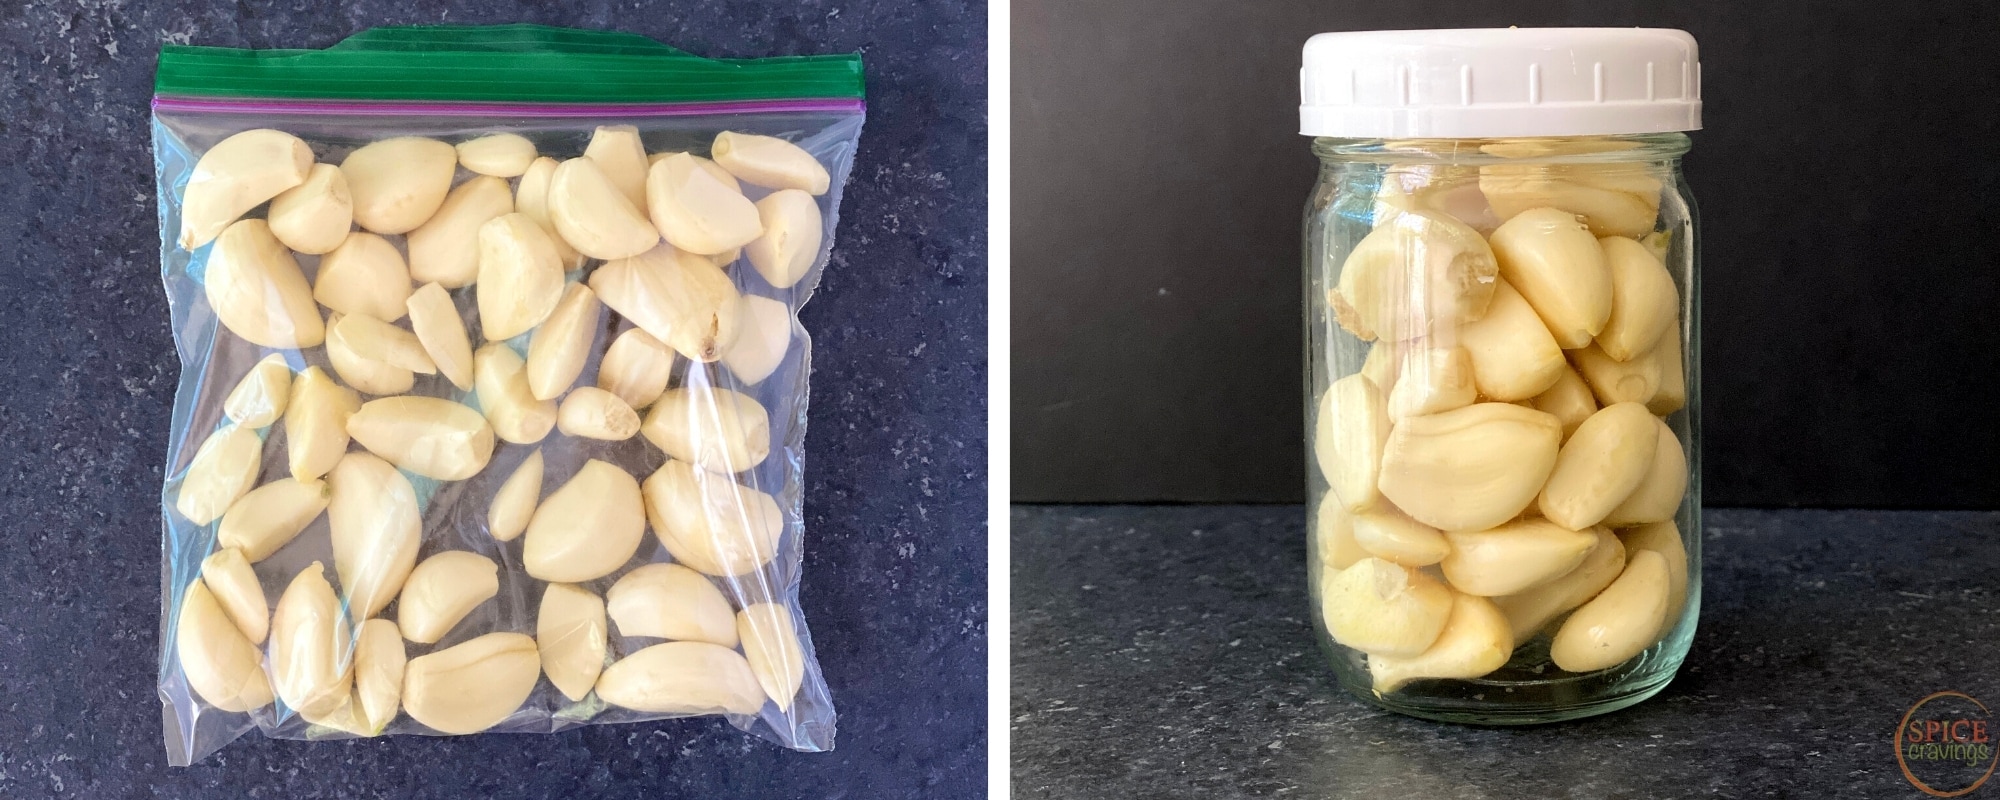 peeled garlic cloves in plastic storage bag and glass jar